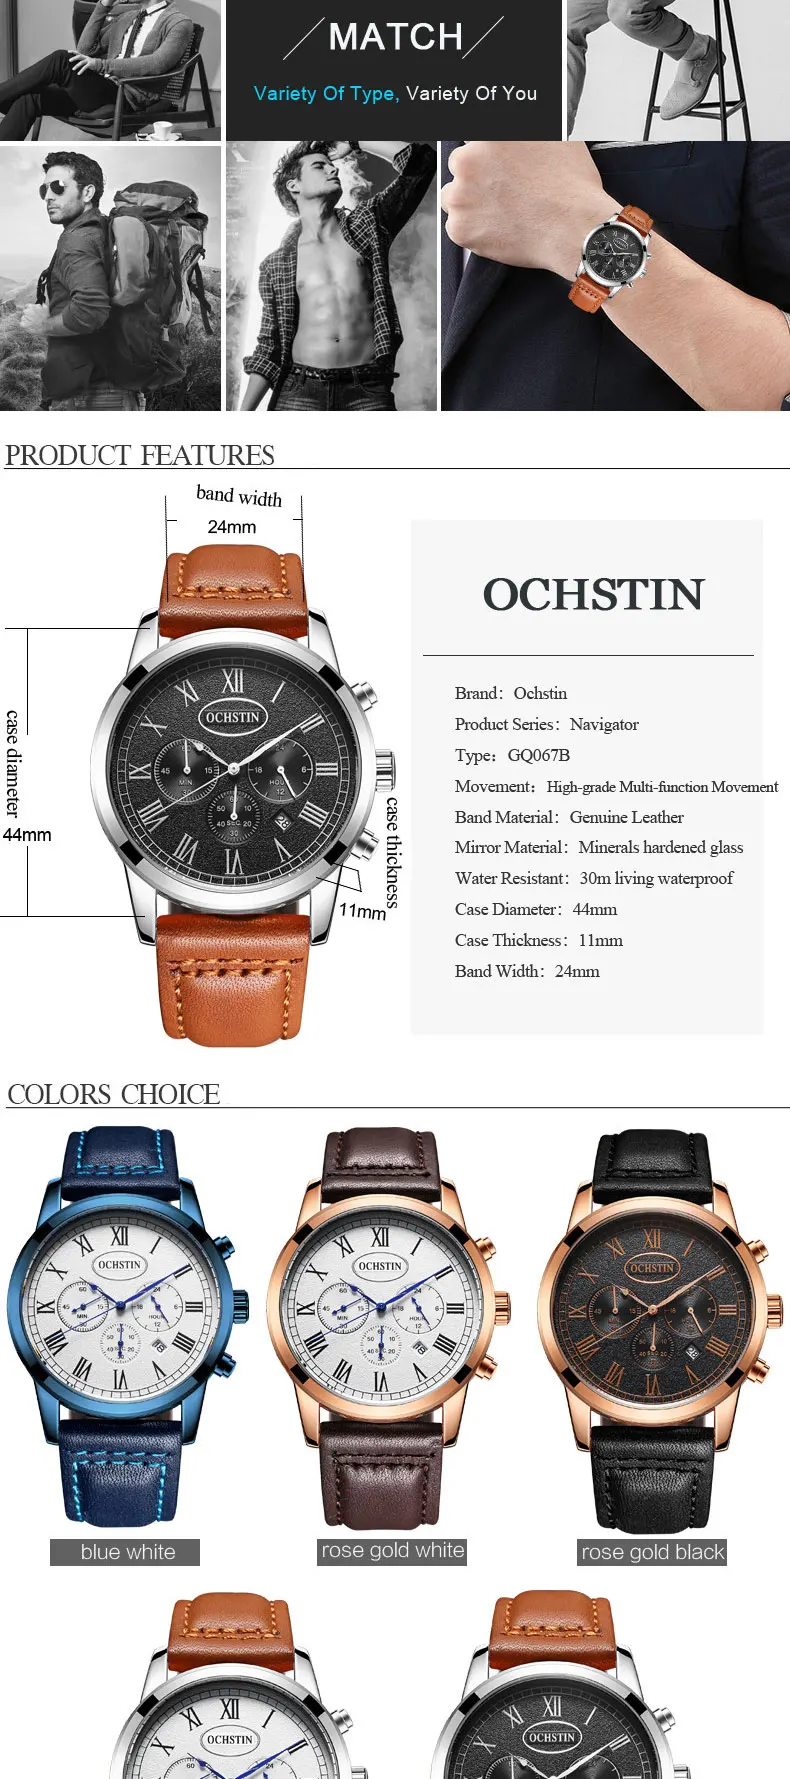 Часы ochstin Для мужчин Элитный бренд натуральная кожа Хронограф дат кварцевые наручные часы спортивные военные наручные часы Для мужчин Бизнес часы